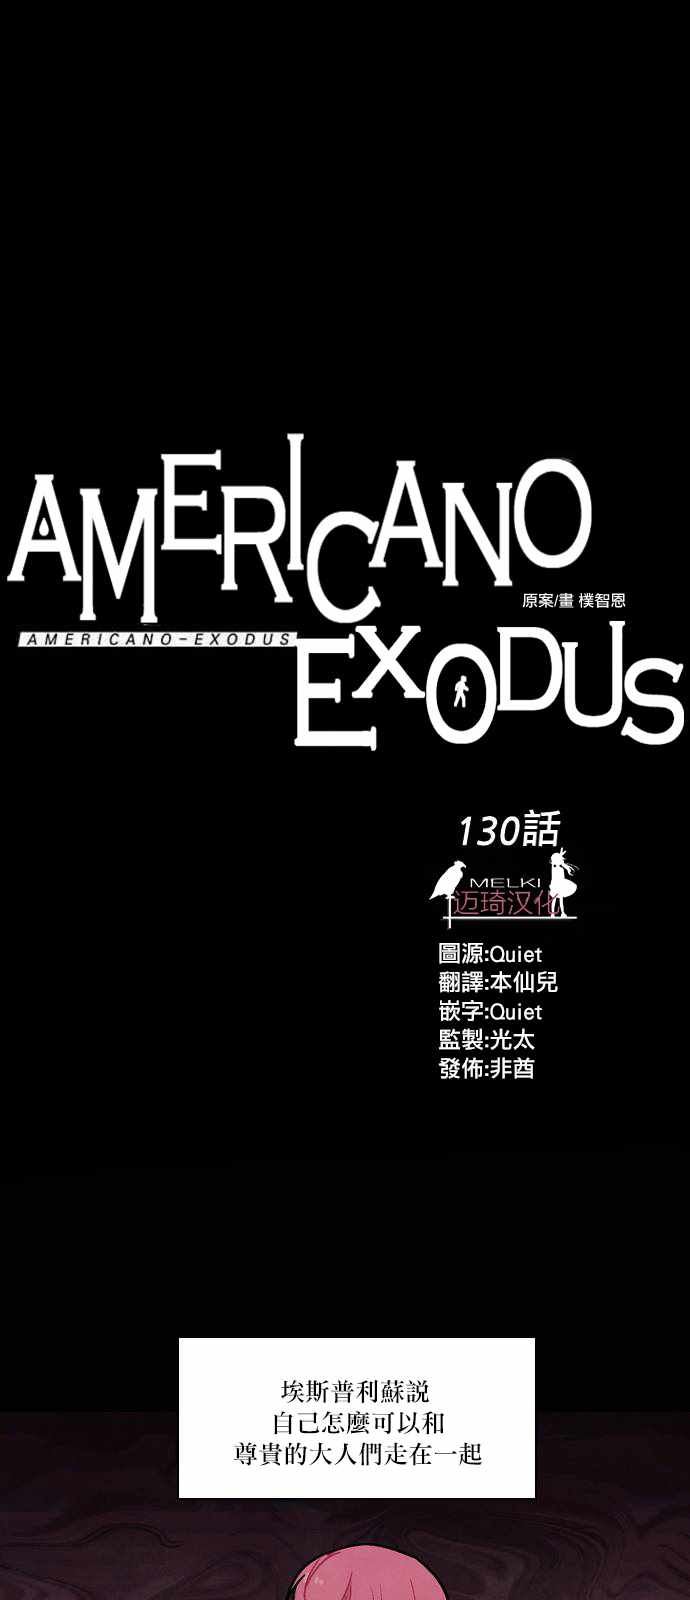 《Americano-exodus》漫画 exodus 130集